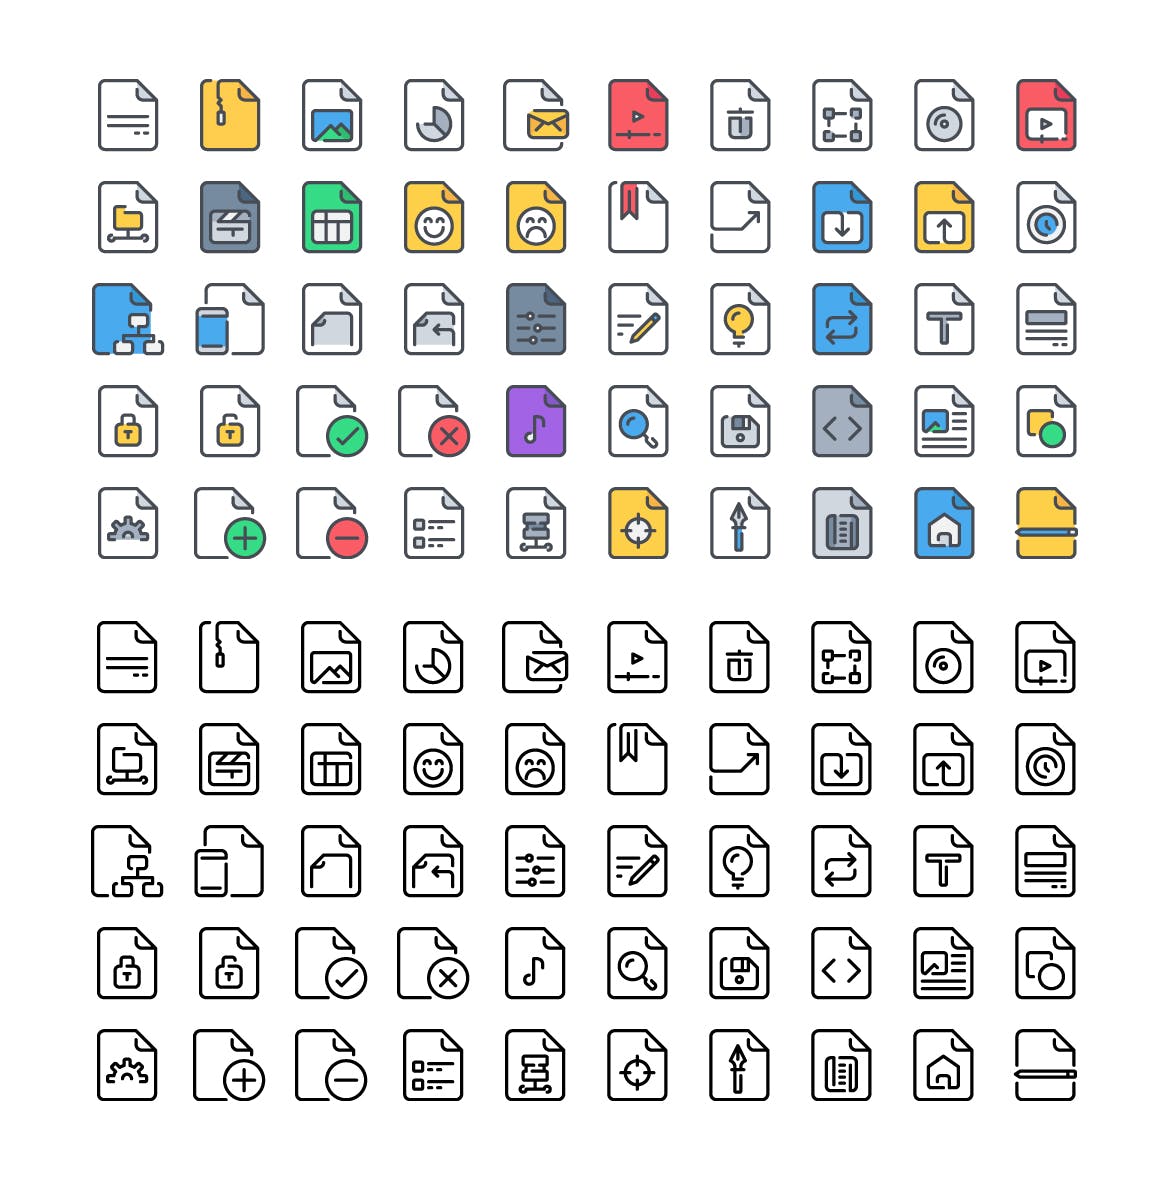 50枚文件/文档图标设计素材 50 File and Document icon set插图(2)